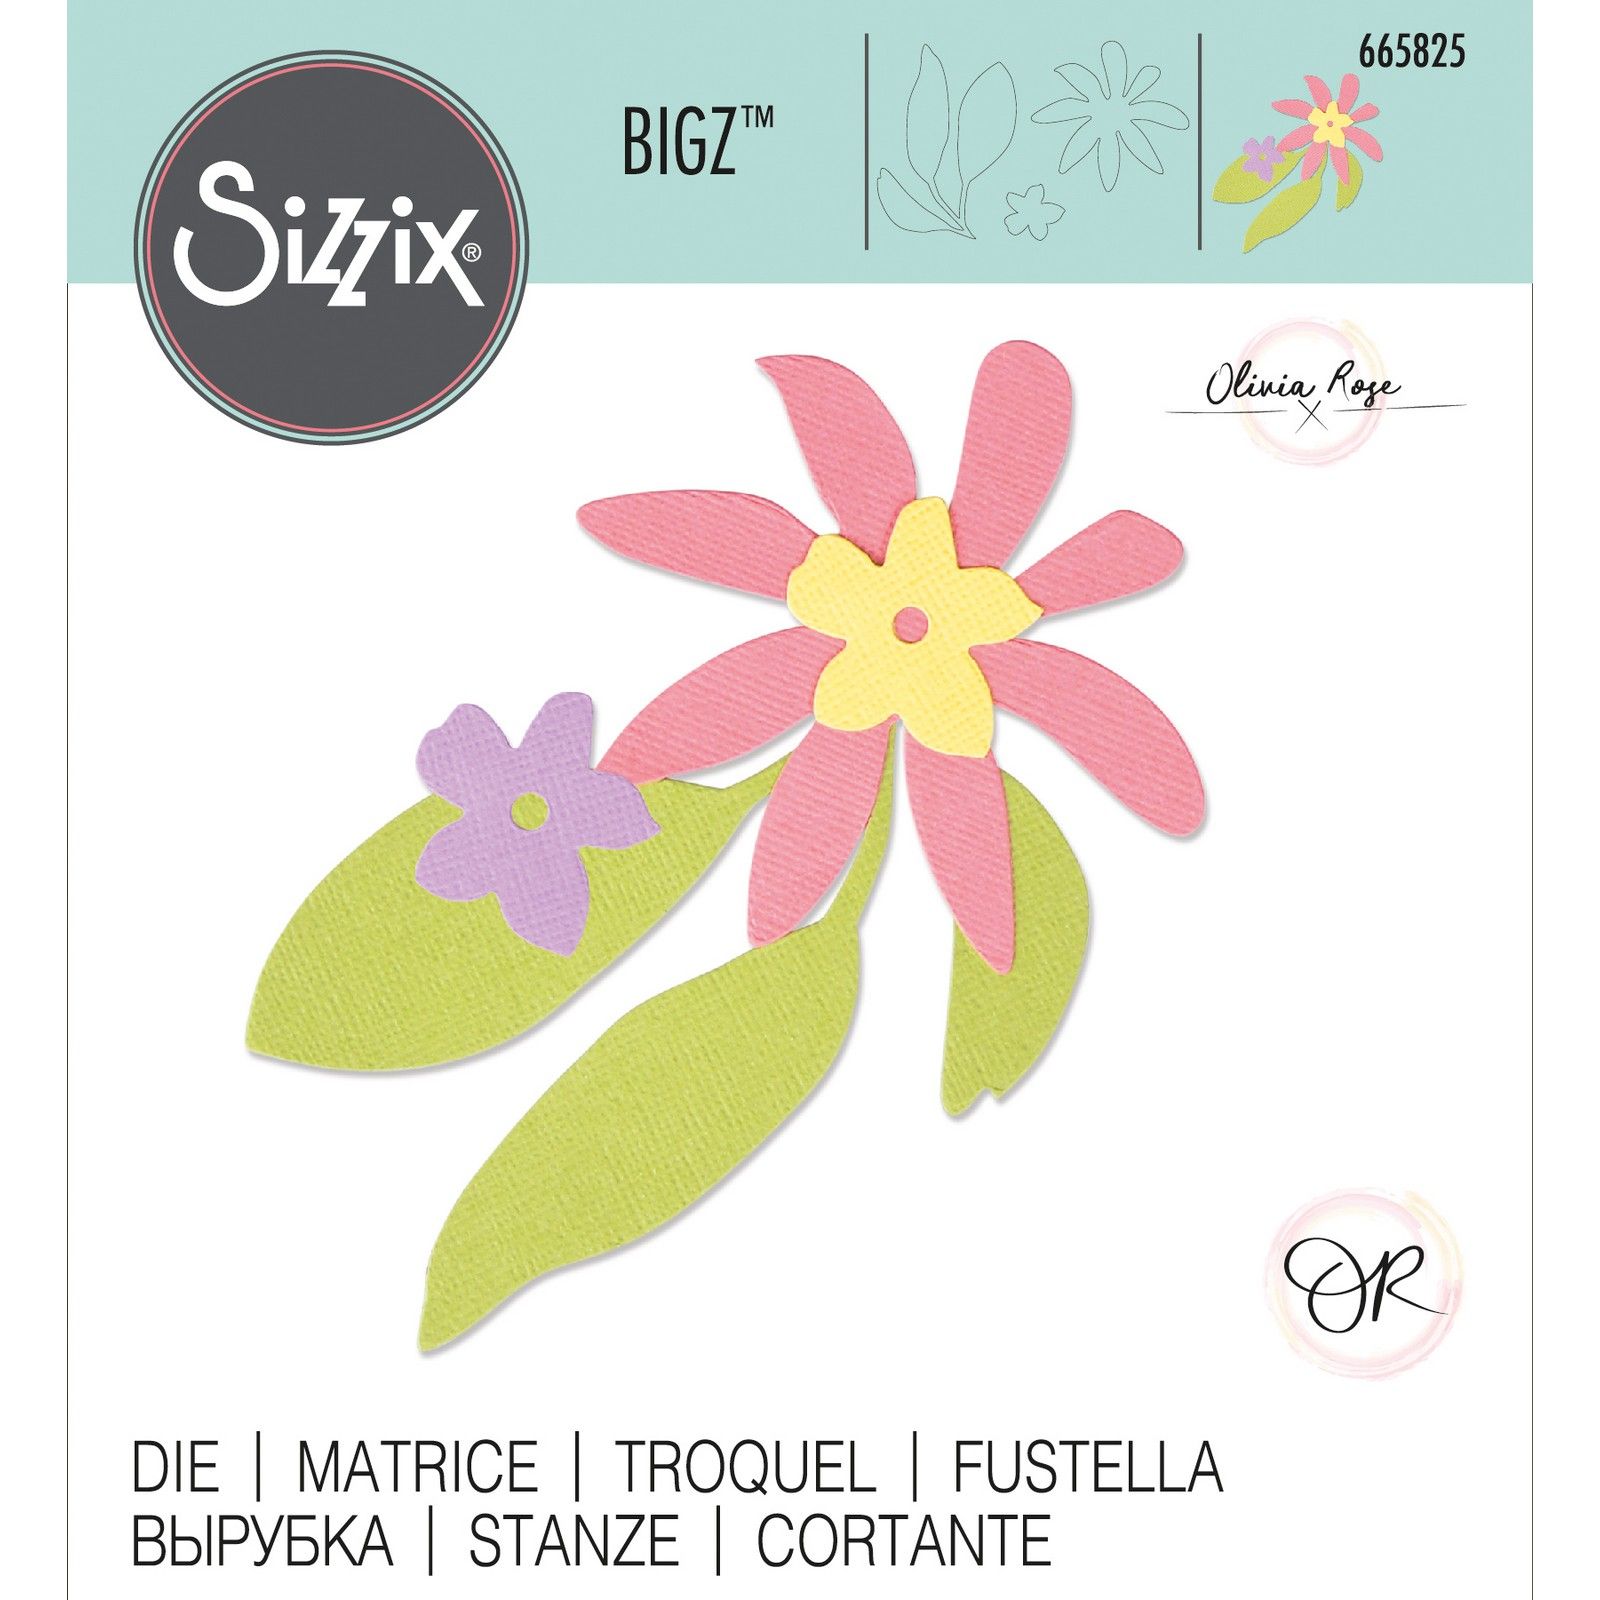 Sizzix • Fustella Bigz Nordic Flowers by Olivia Rose